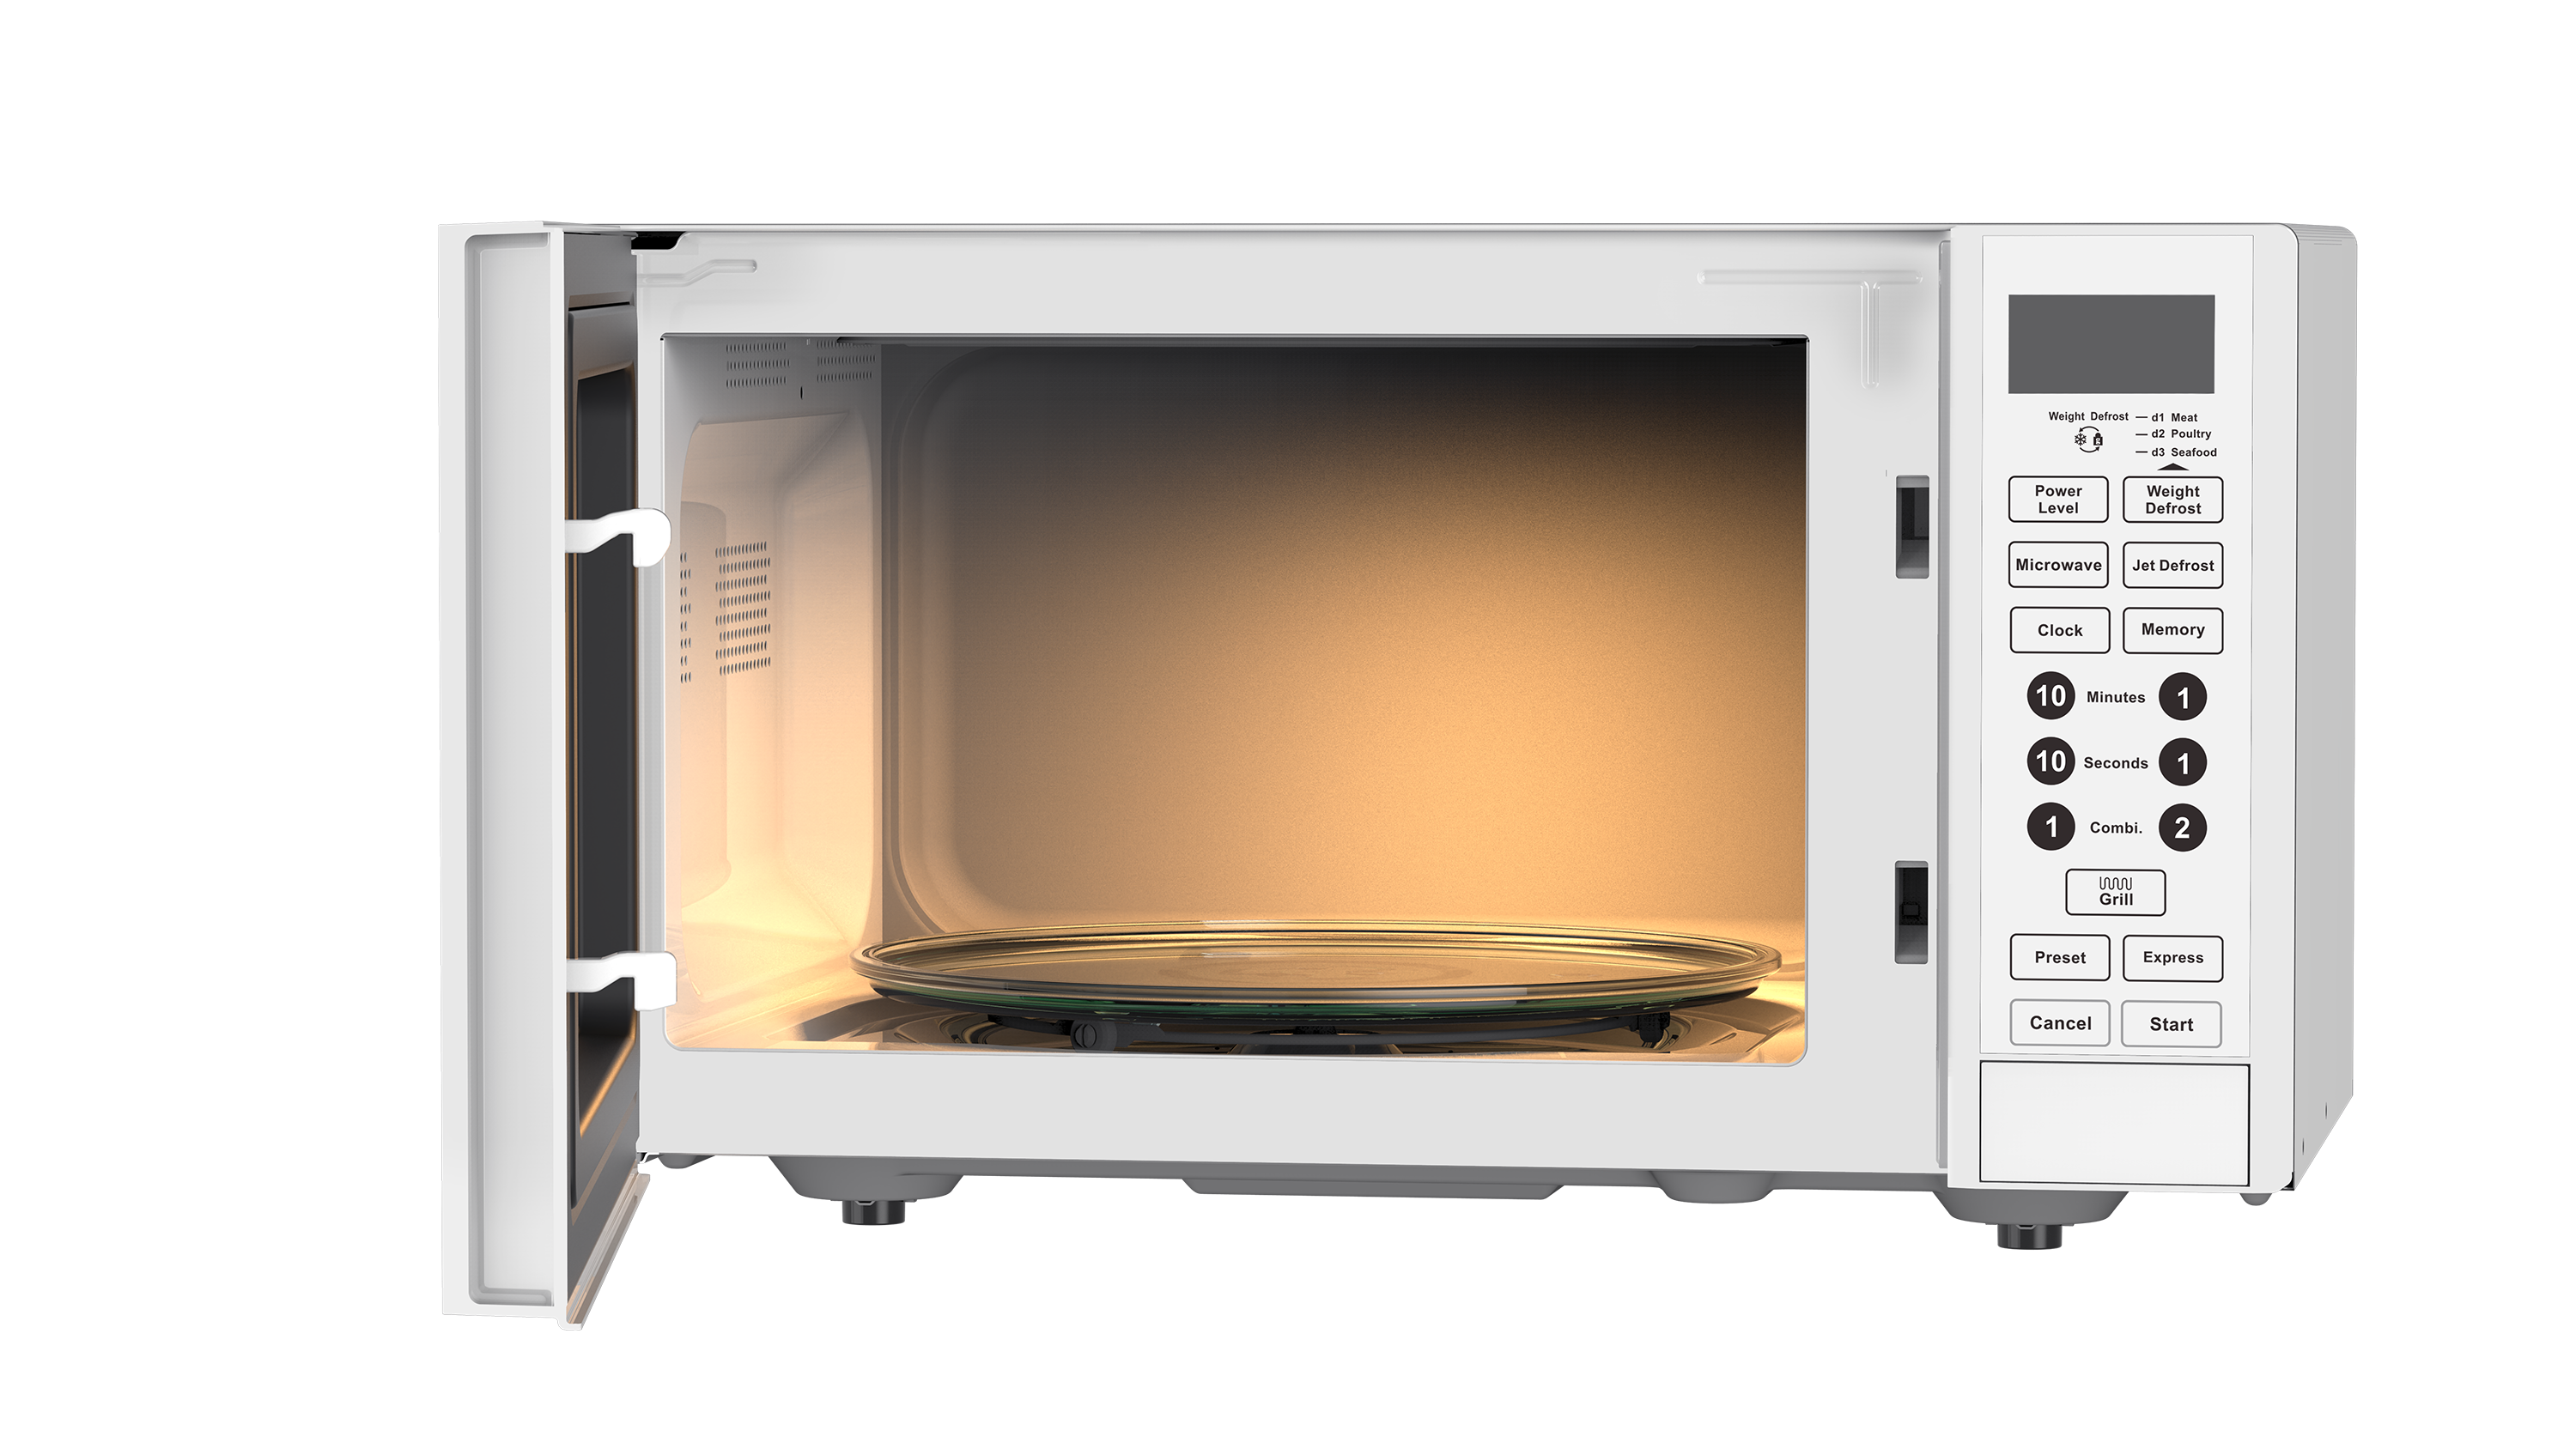 Bianco Funzione Grill 23 L Digitale Beko forno a Microonde MGF23330W 